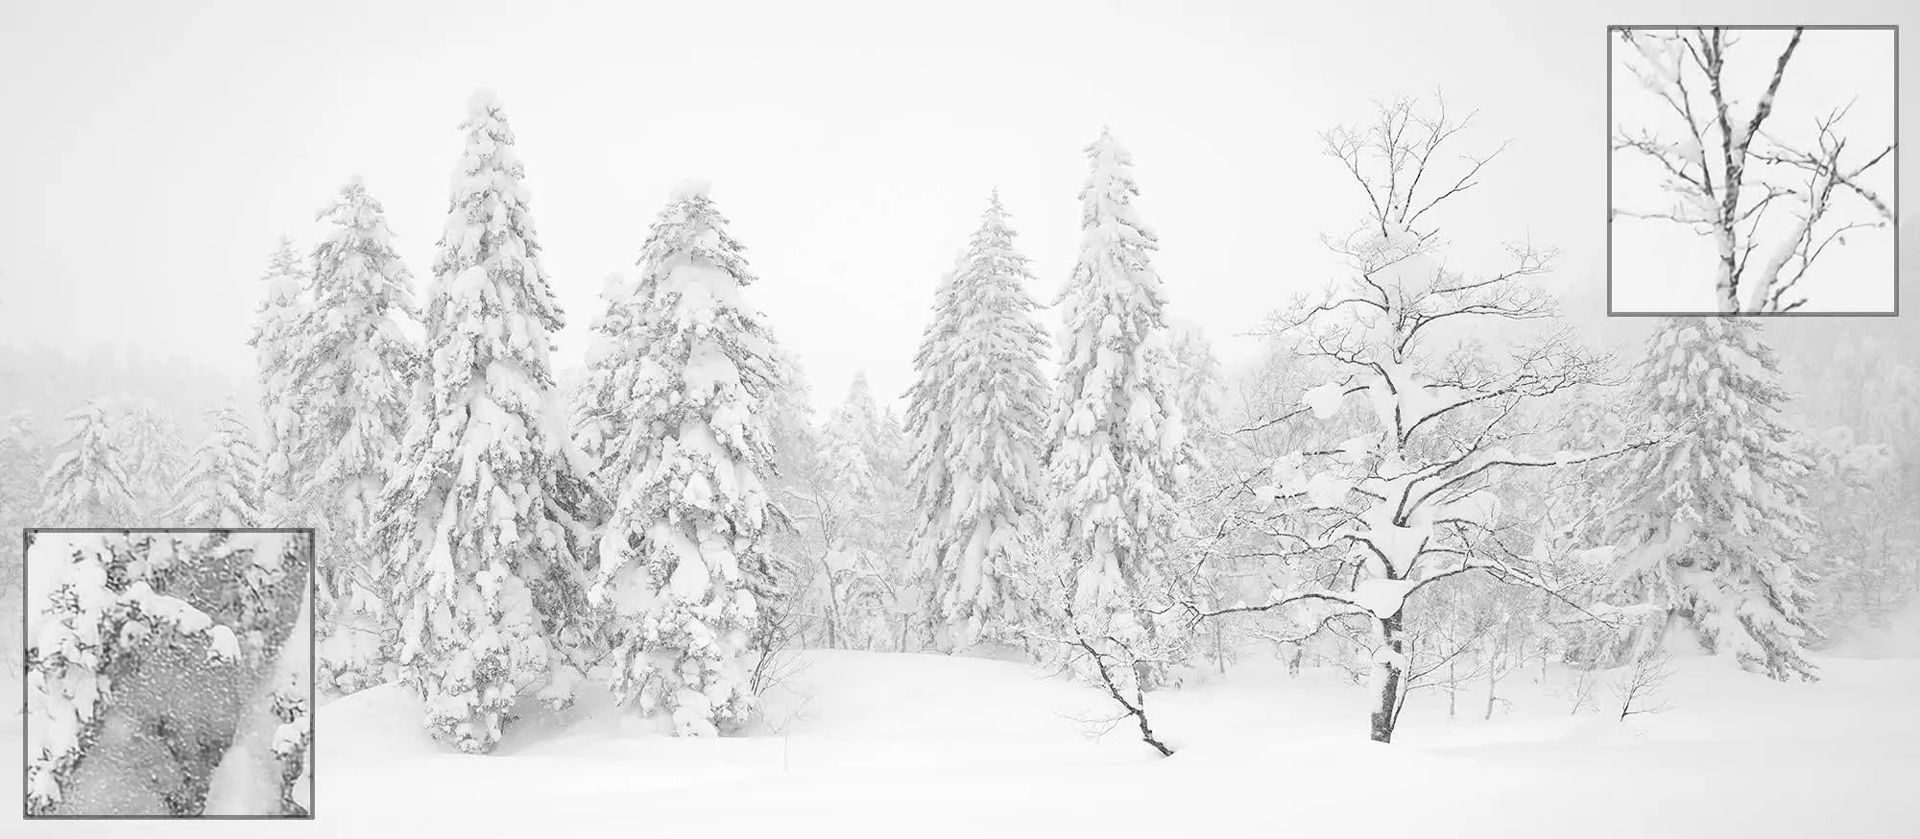 مرجع متخصصين ايران نماي جنگل برفي در زمستان كراپ تصوير درخت